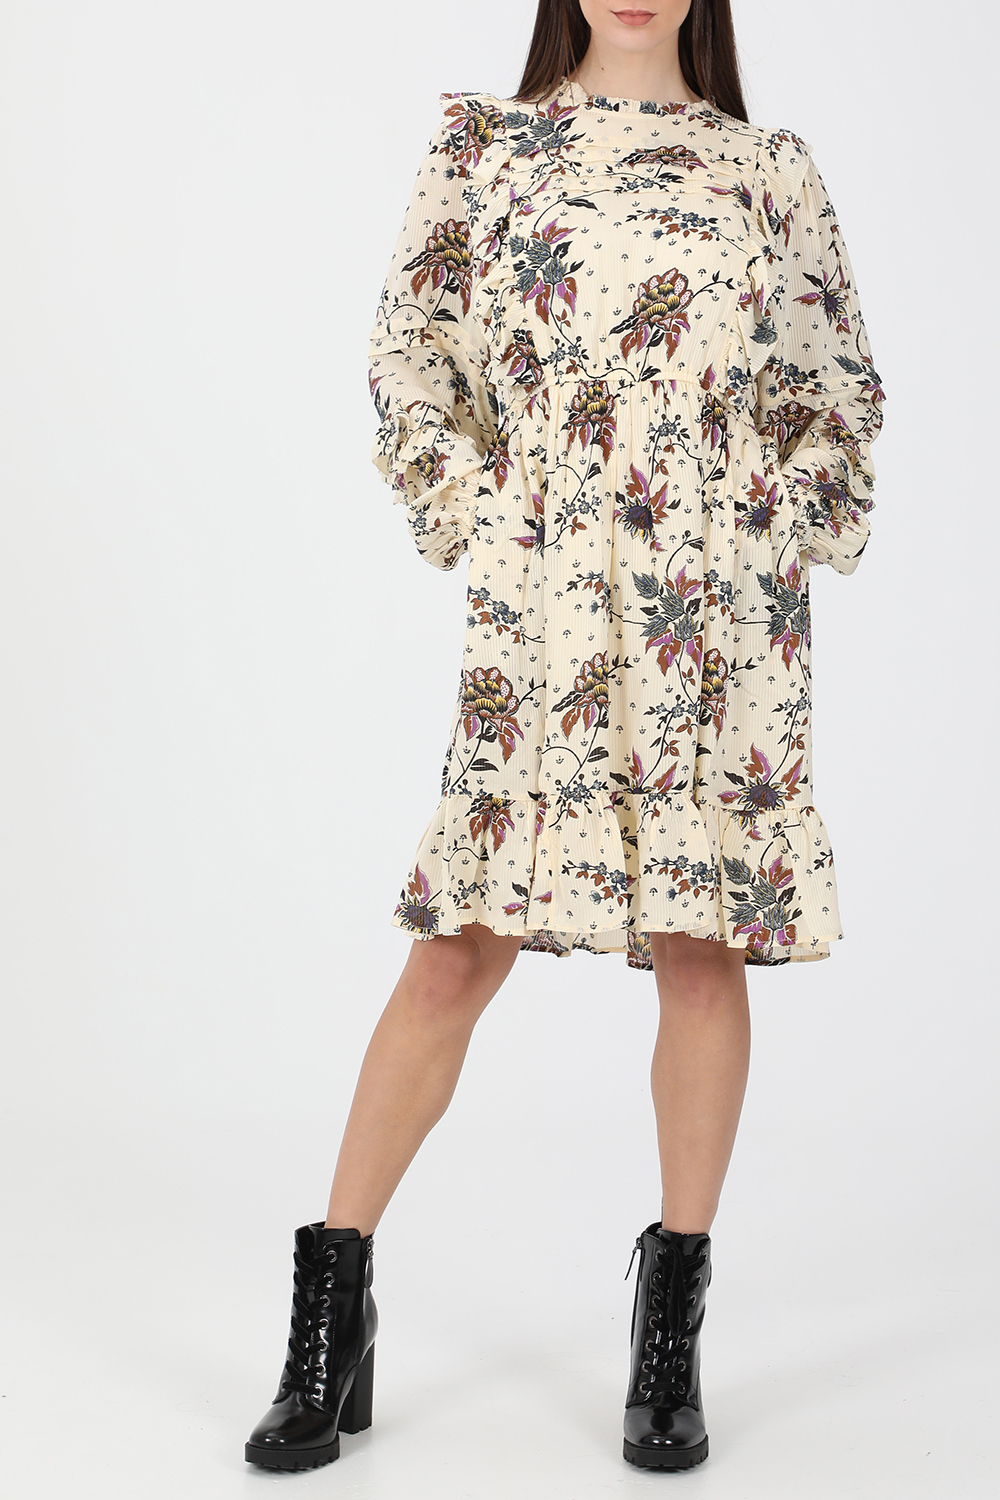 SCOTCH & SODA – Γυναικείο mini φόρεμα SCOTCH & SODA Printed ruffle dress εκρού floral 1821063.0-0206